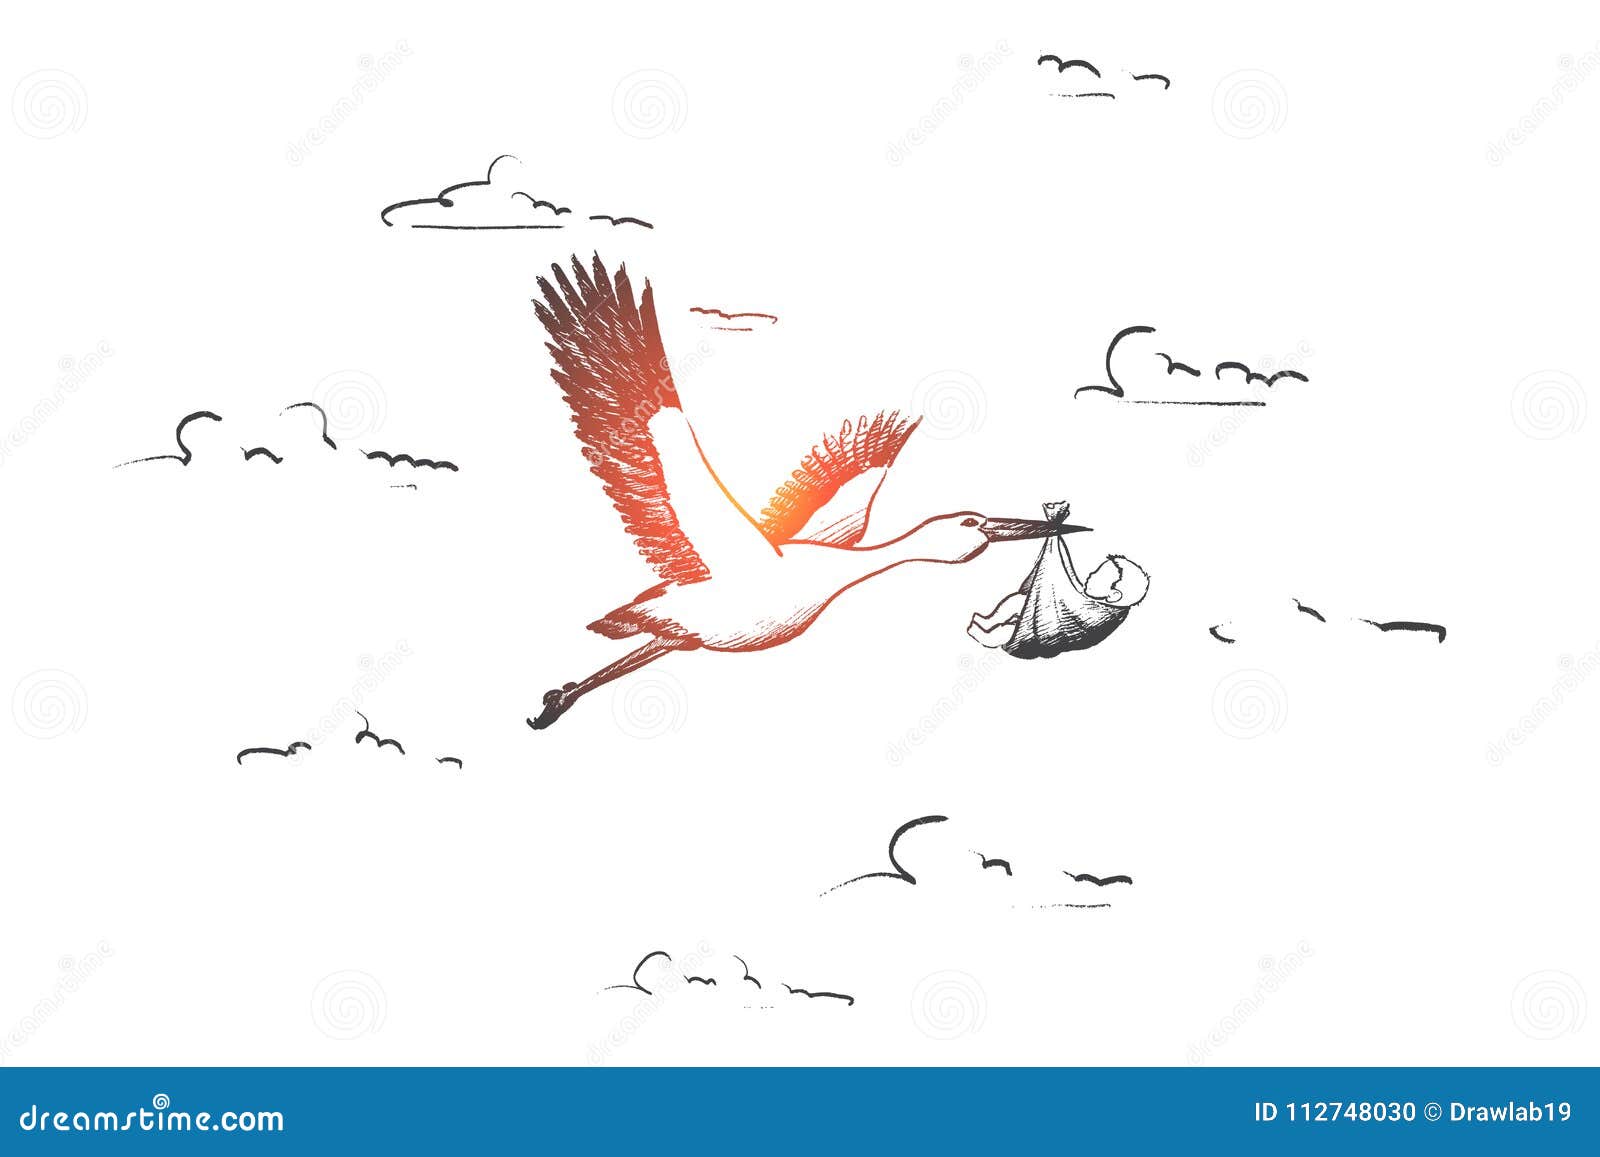 Pregnancy concept. Hand drawn vector. Pregnancy concept. Hand drawn stork in flight delivering a newborn baby. Symbol of newborn child vector illustration.